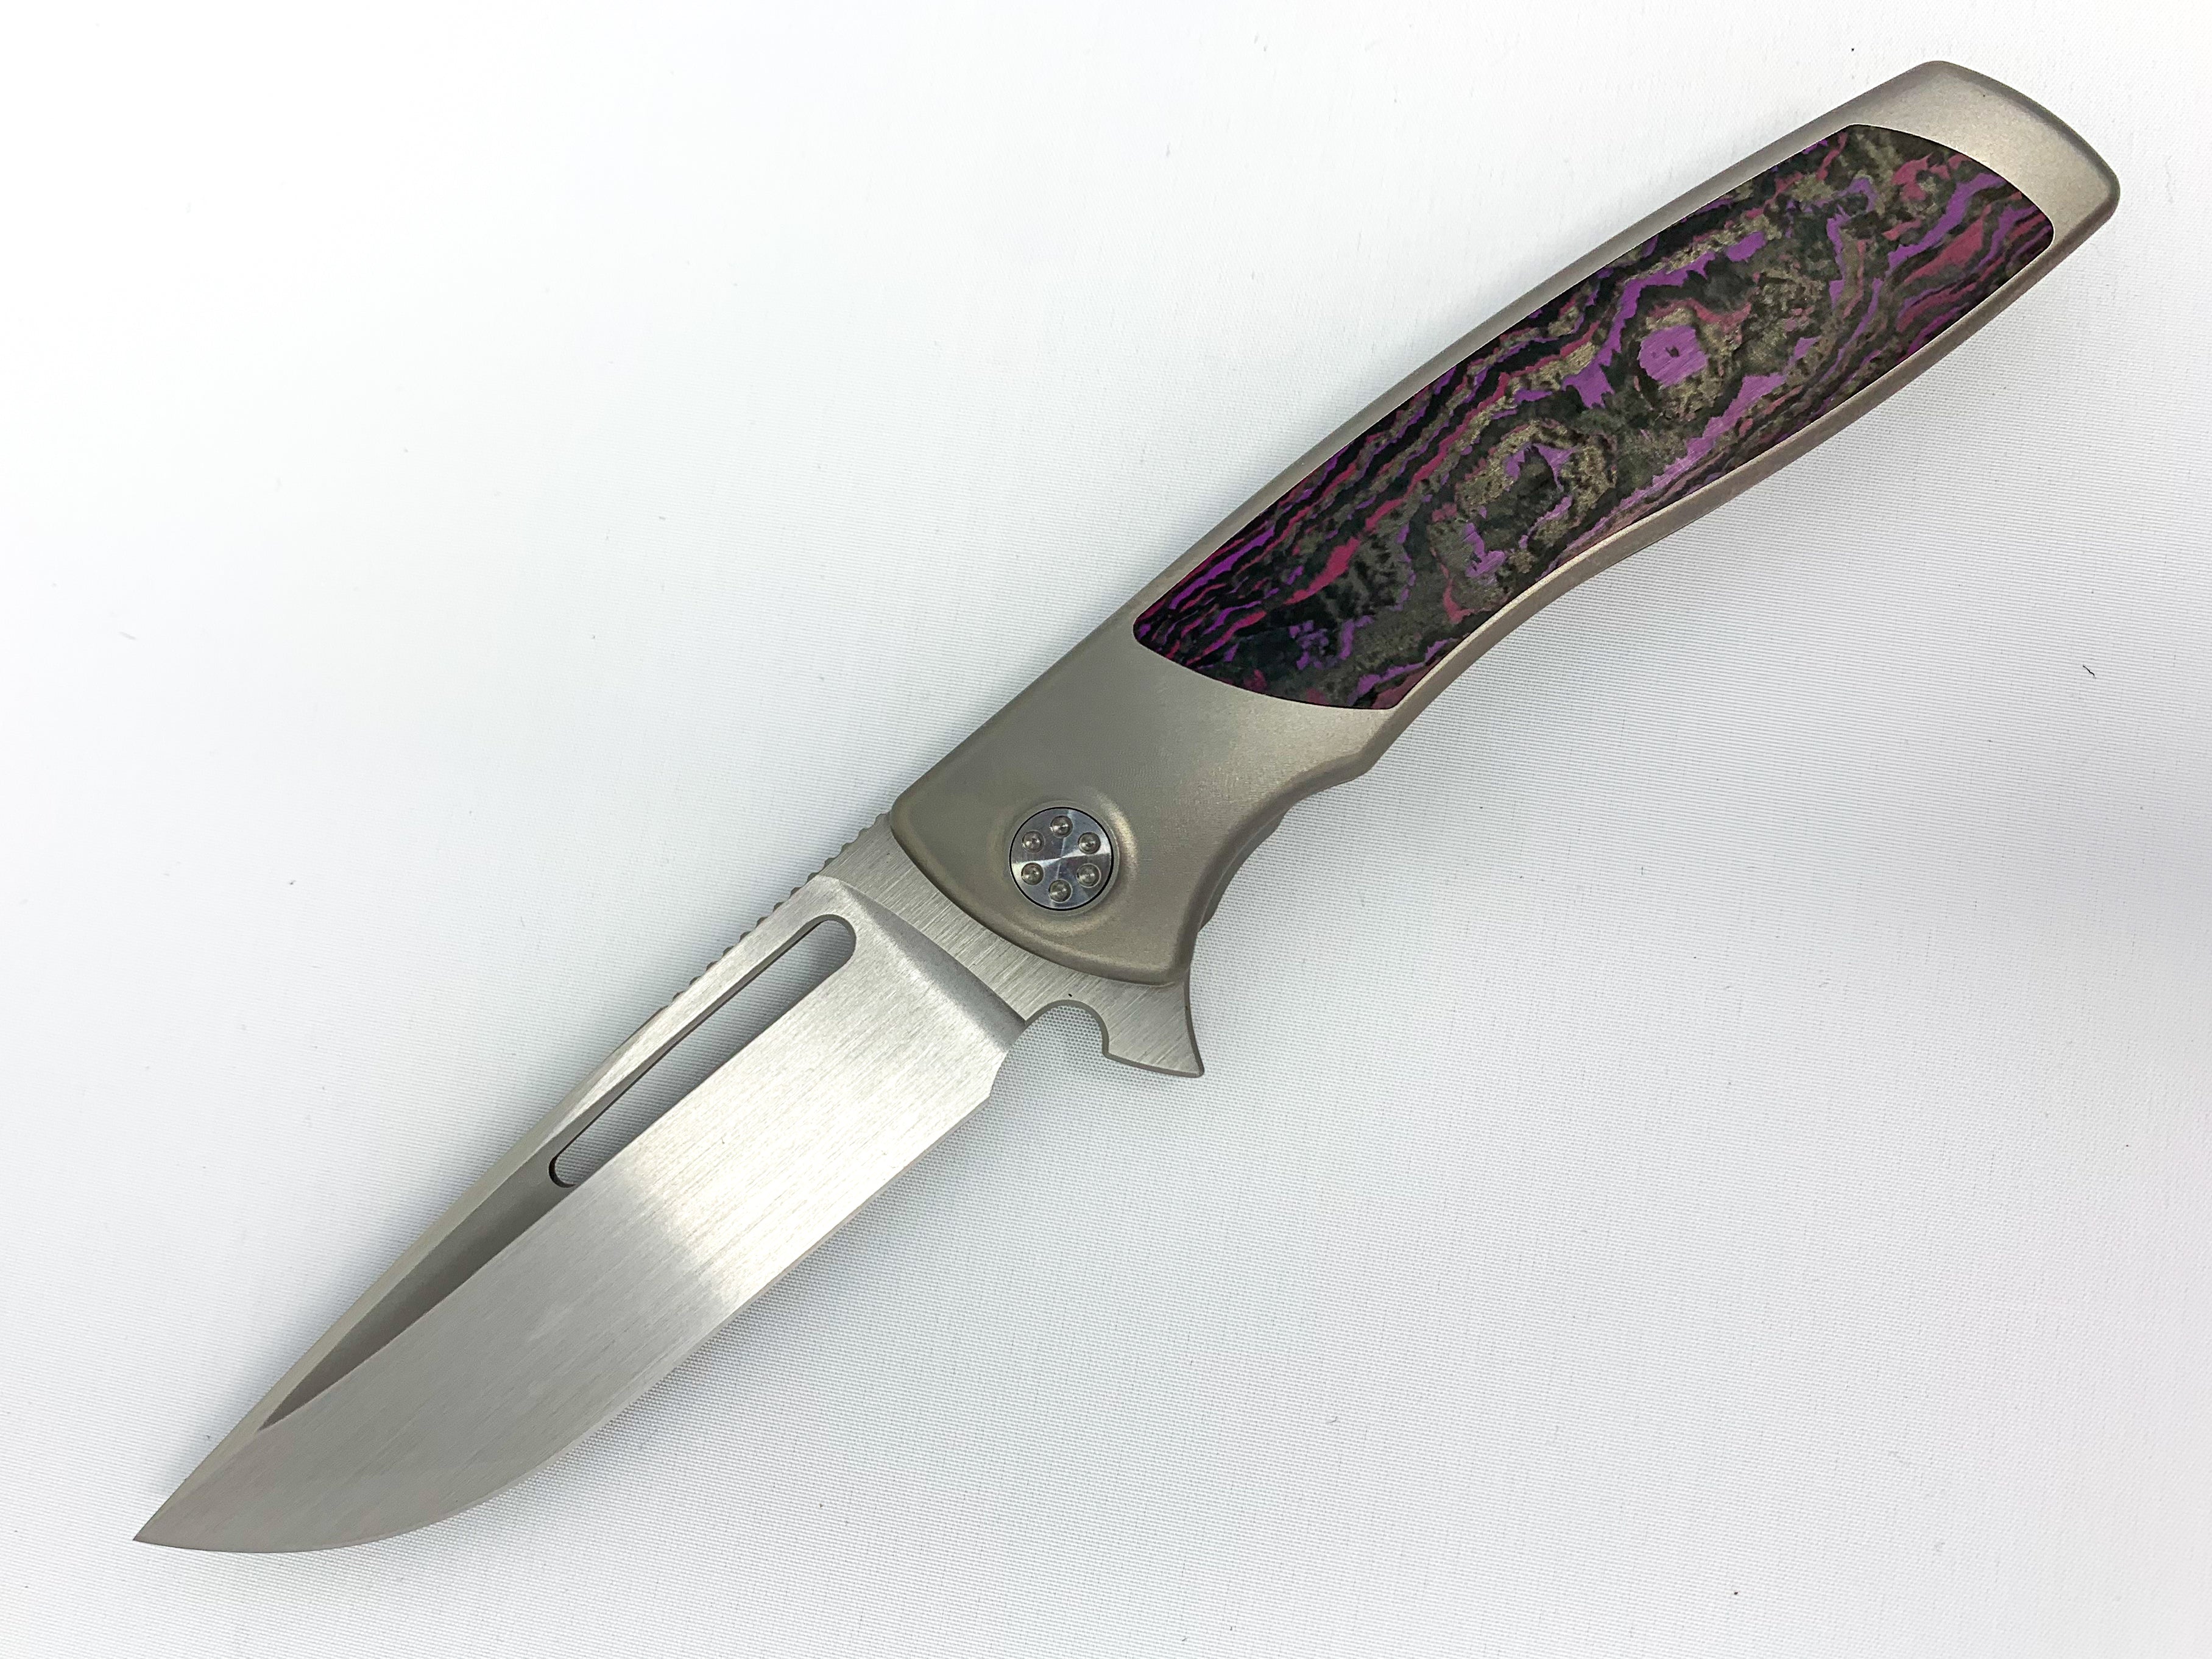 Sharp By Design Mini Evo - M390 Drop Point Blade - Fat Carbon "Purple Haze" Inlay - Titanium Handle - CLOSEOUT